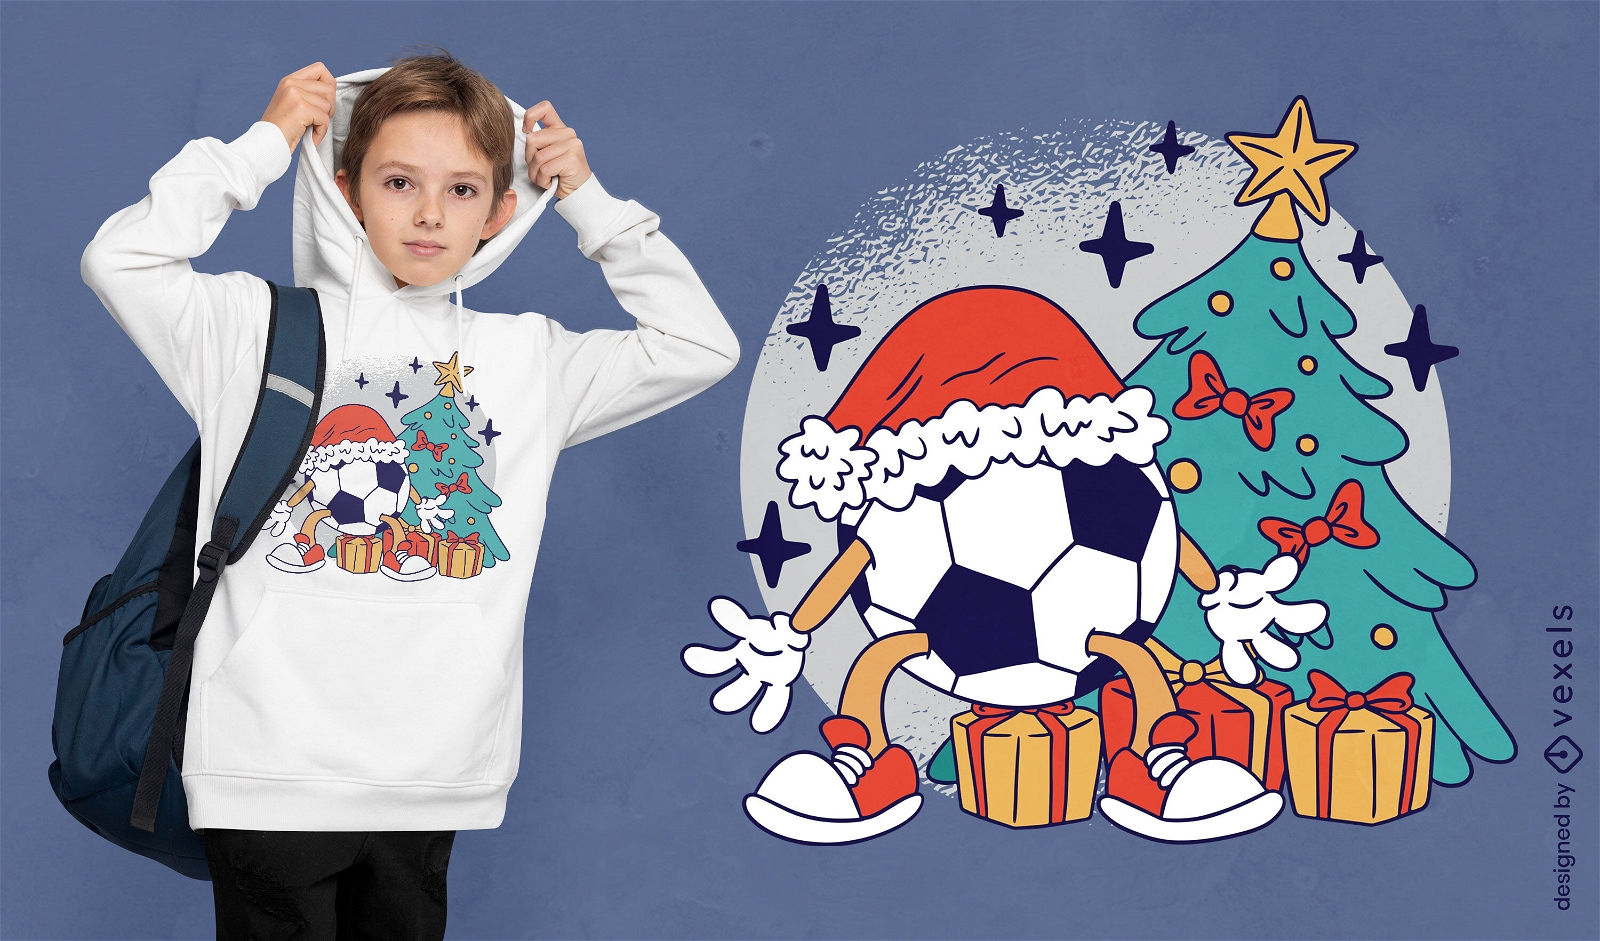 Soccer ball Christmas t-shirt design